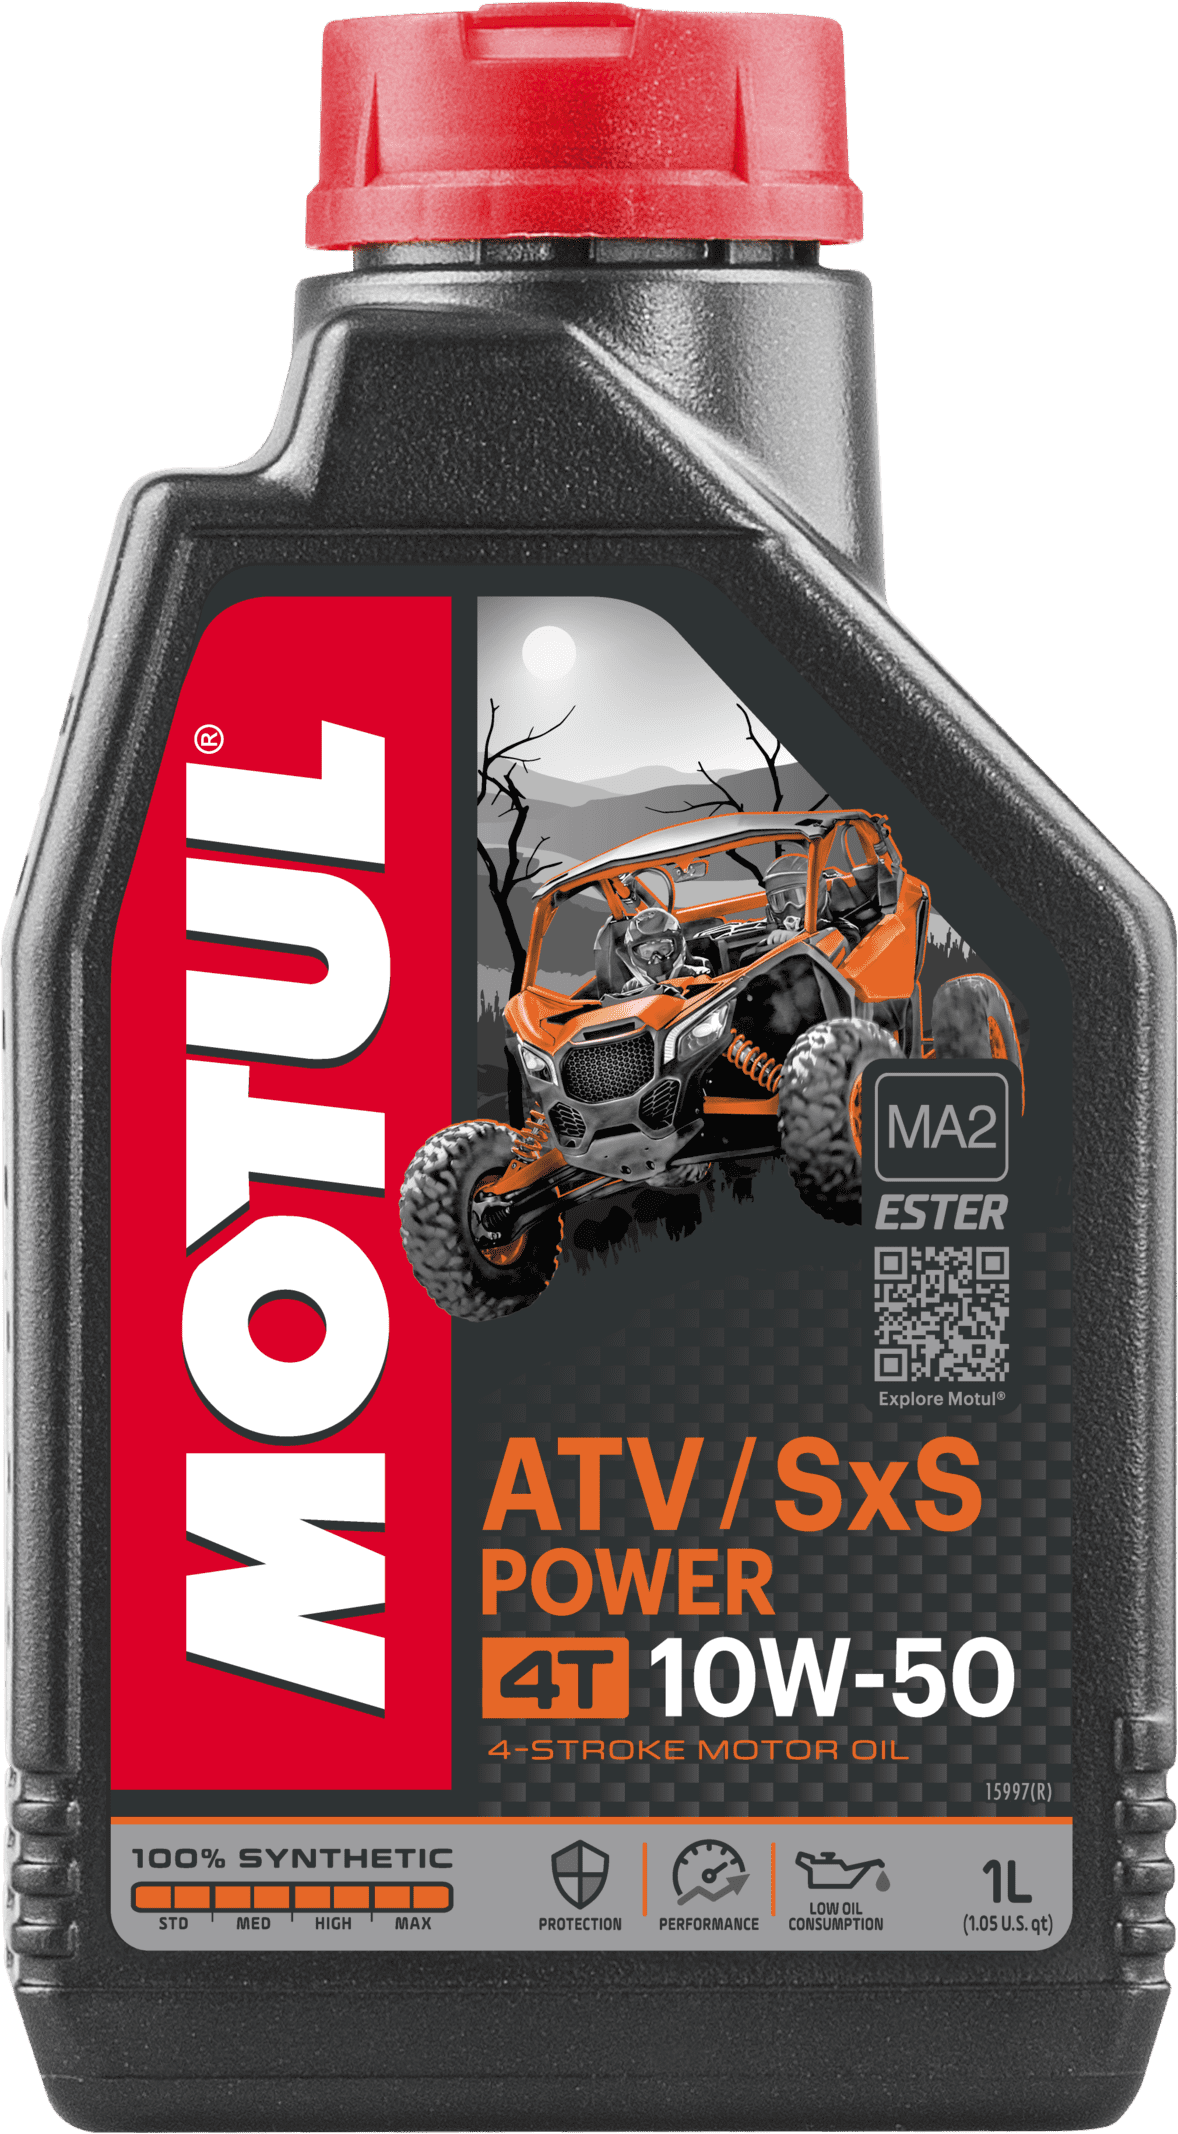 Motul ATV / SxS Power 4T 10W-50, 1 lt